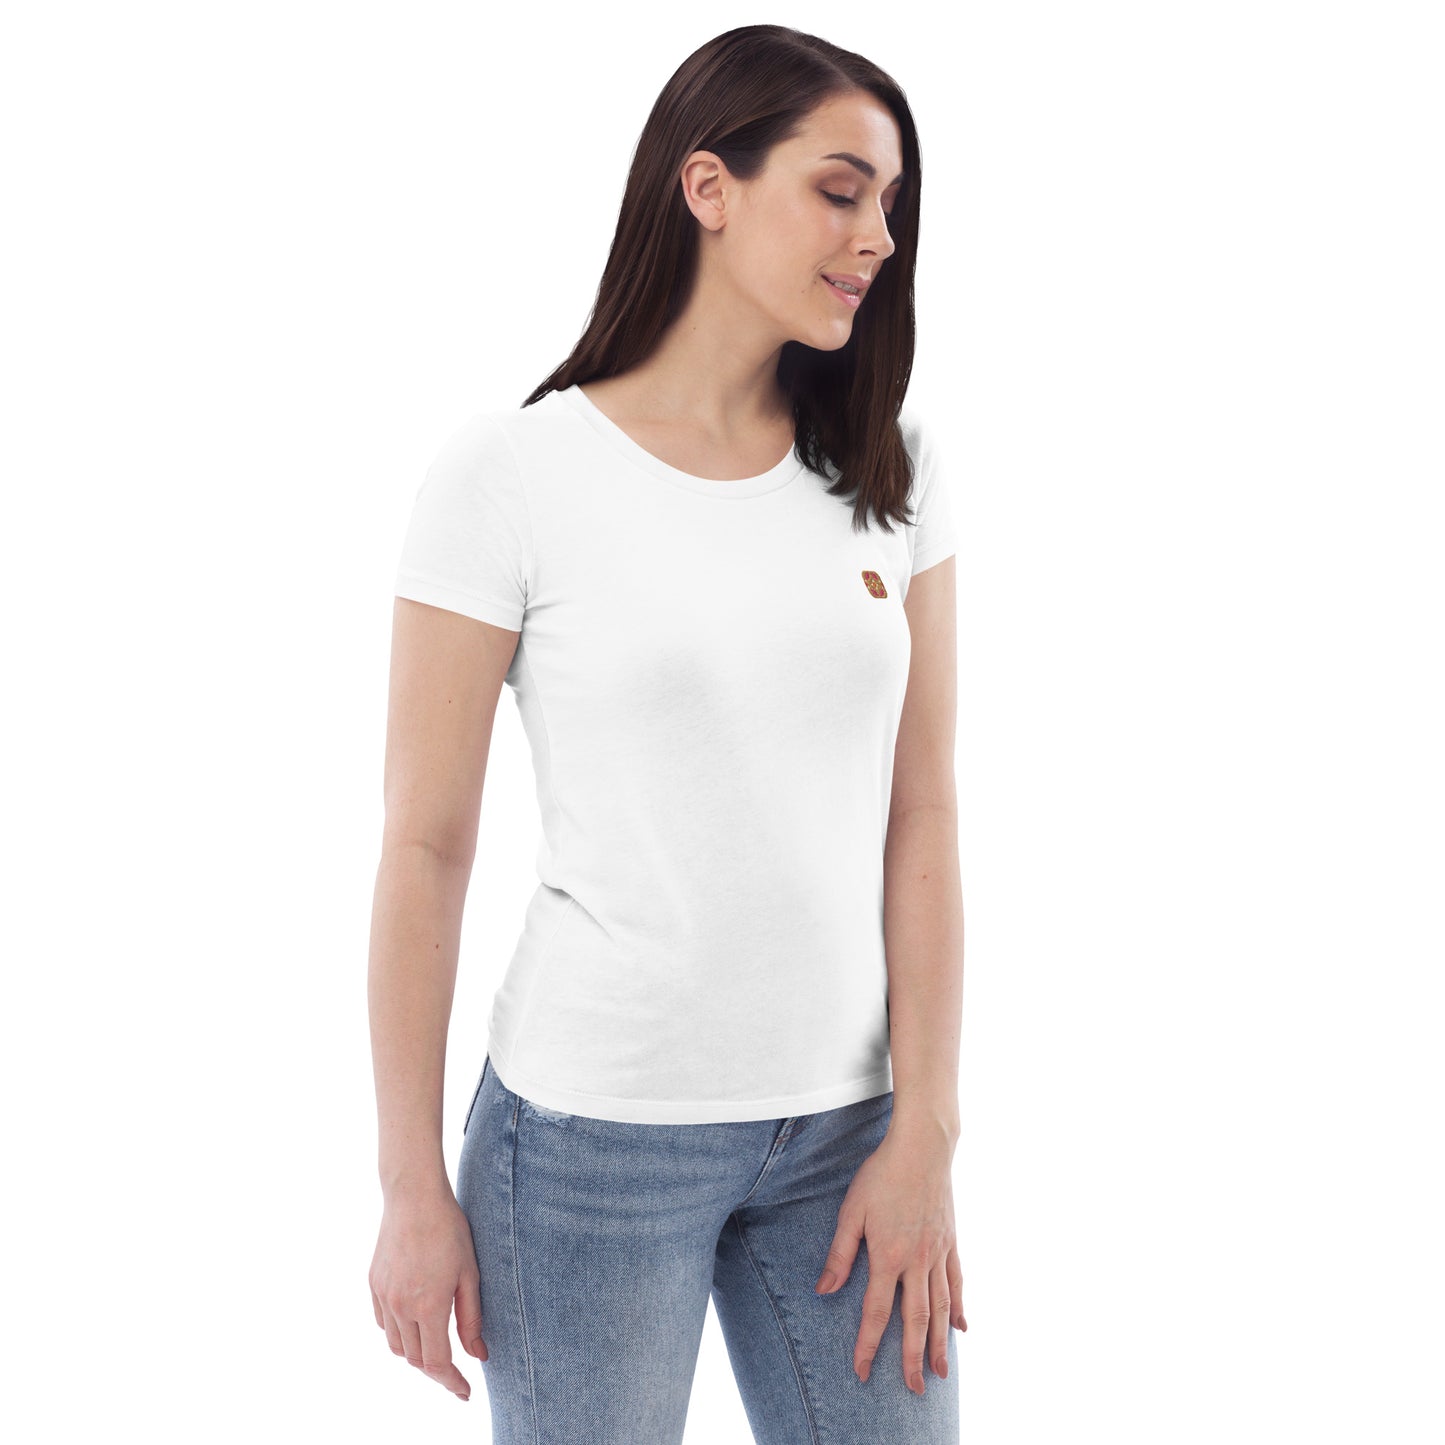 T-shirt bianca ricamata con uccelli primaverili in stile Bauhaus in cotone biologico - Donna bianco